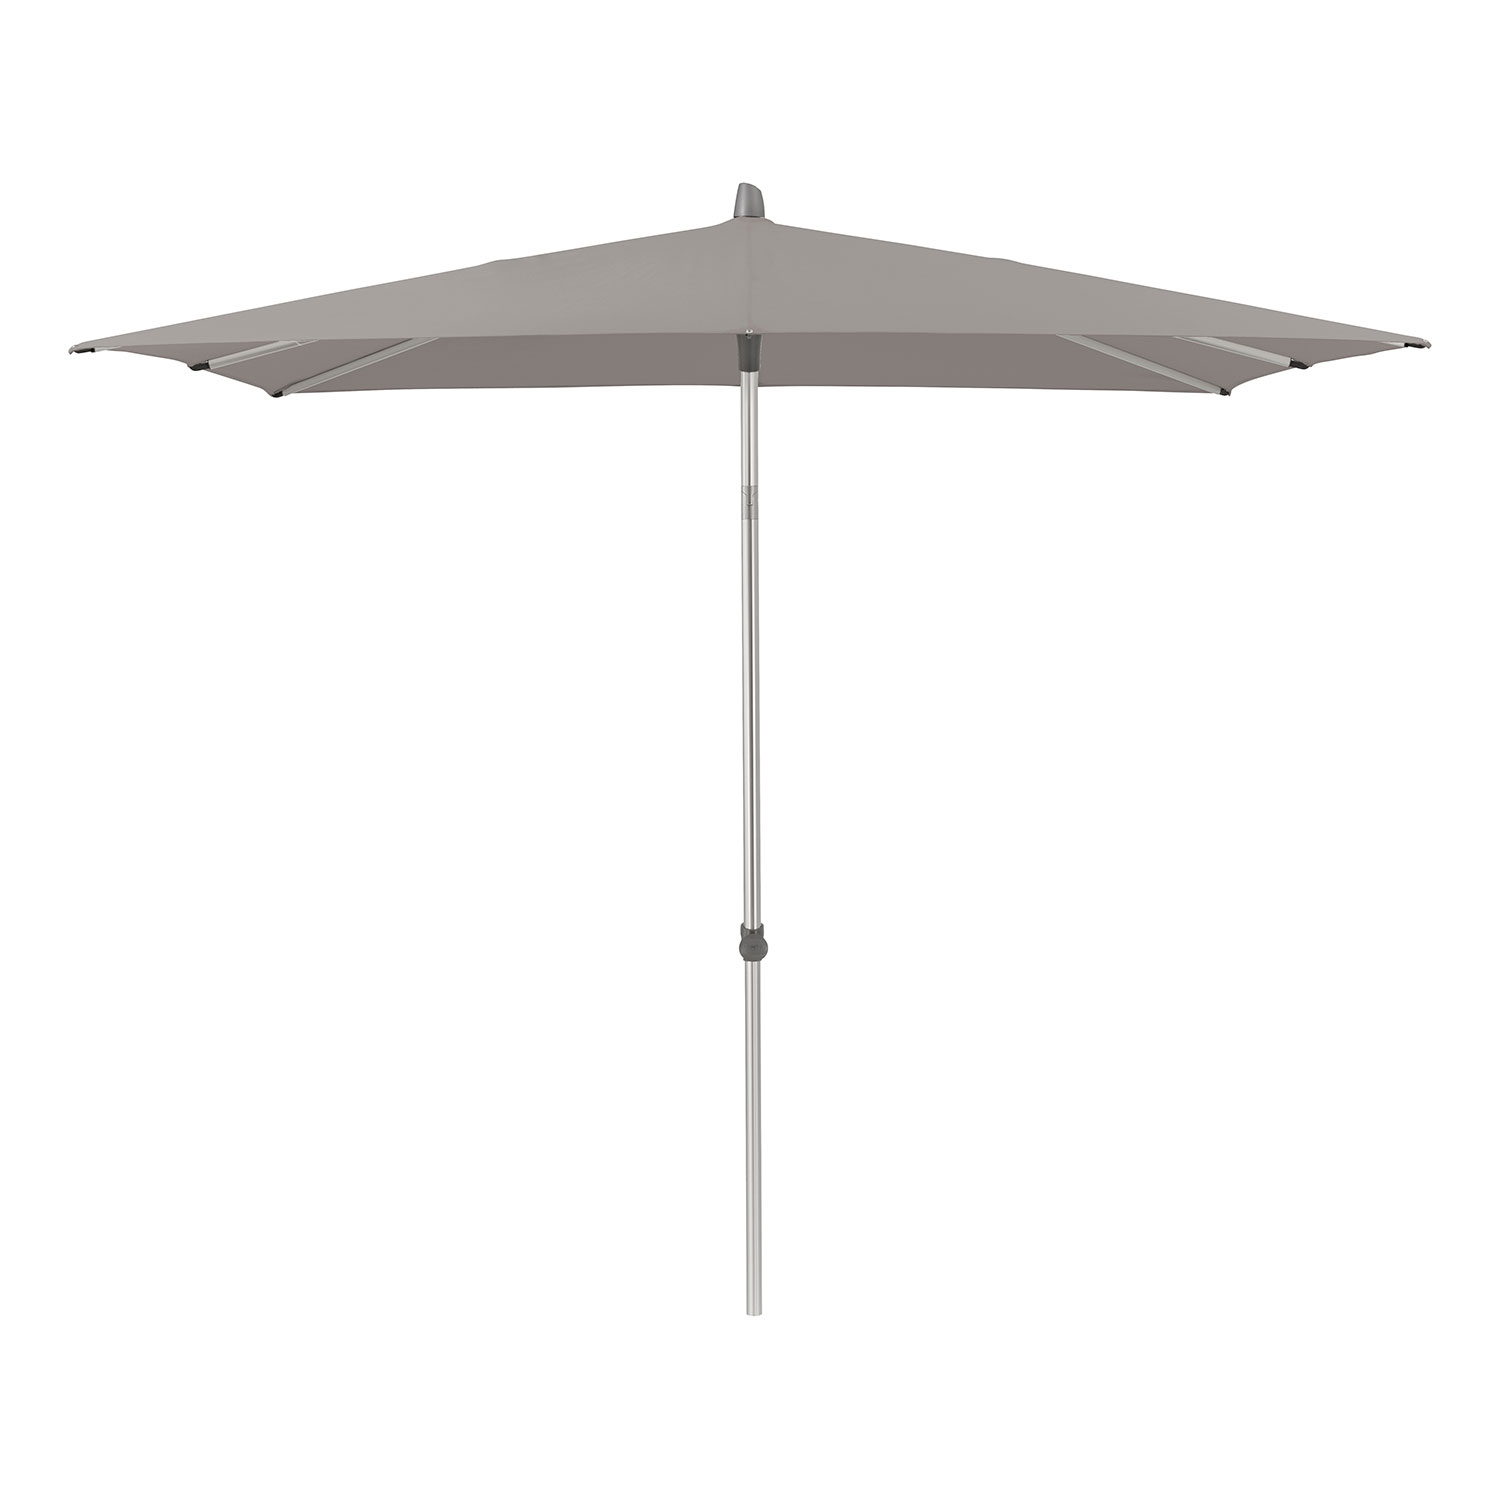 Glatz Alu-smart parasoll 200×200 cm kat.5 686 urban clay